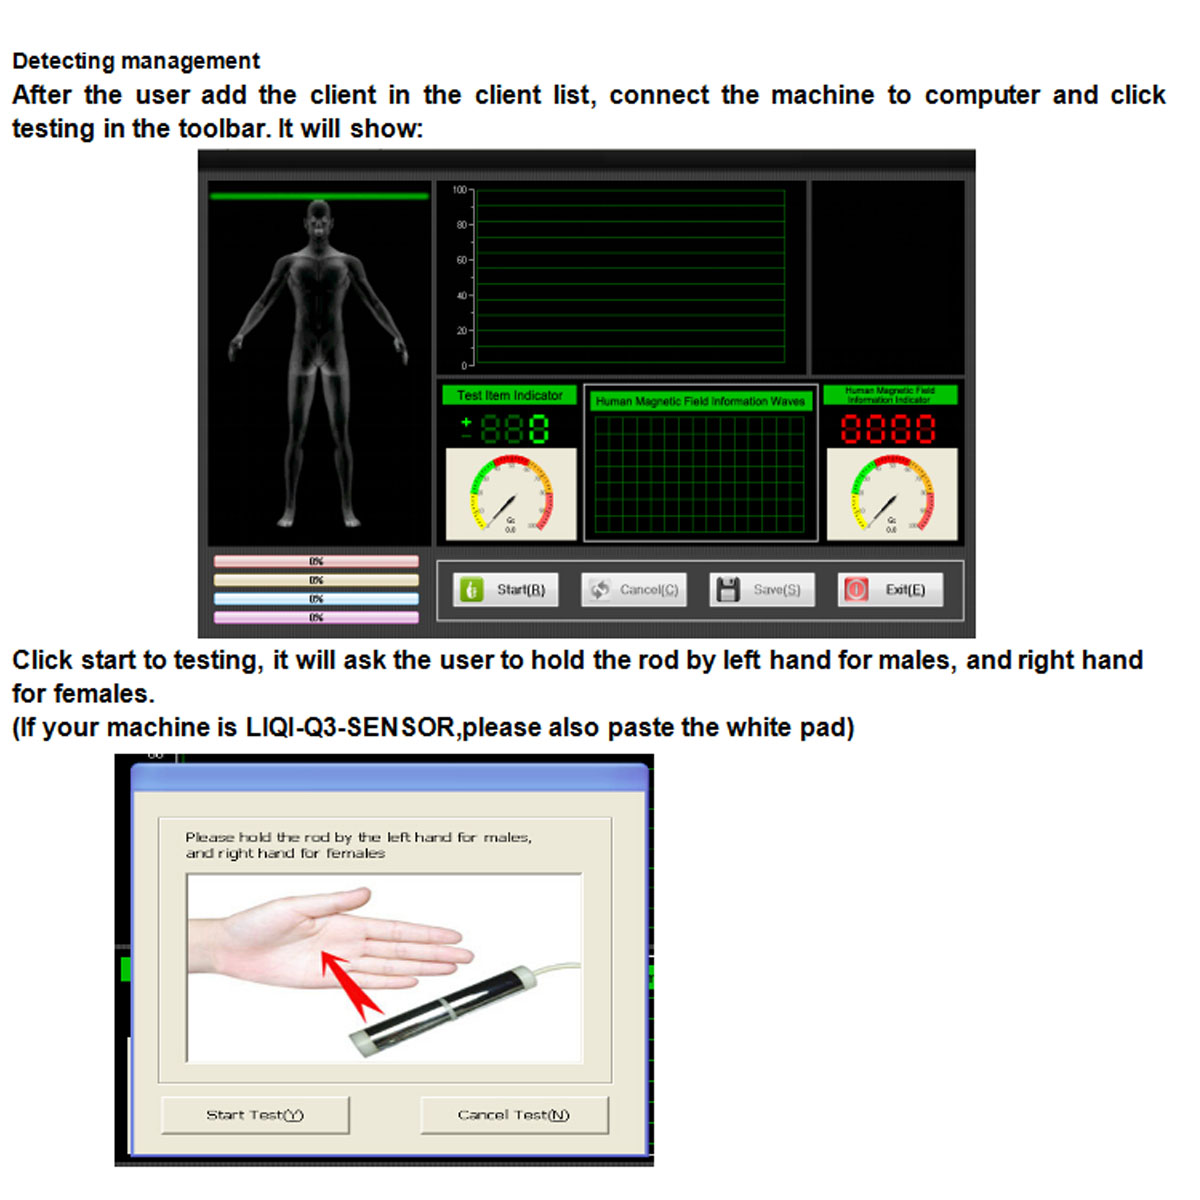 USB Quantum Magnetic Resonance Health Body Analyzer English Massage Therapy Device 29